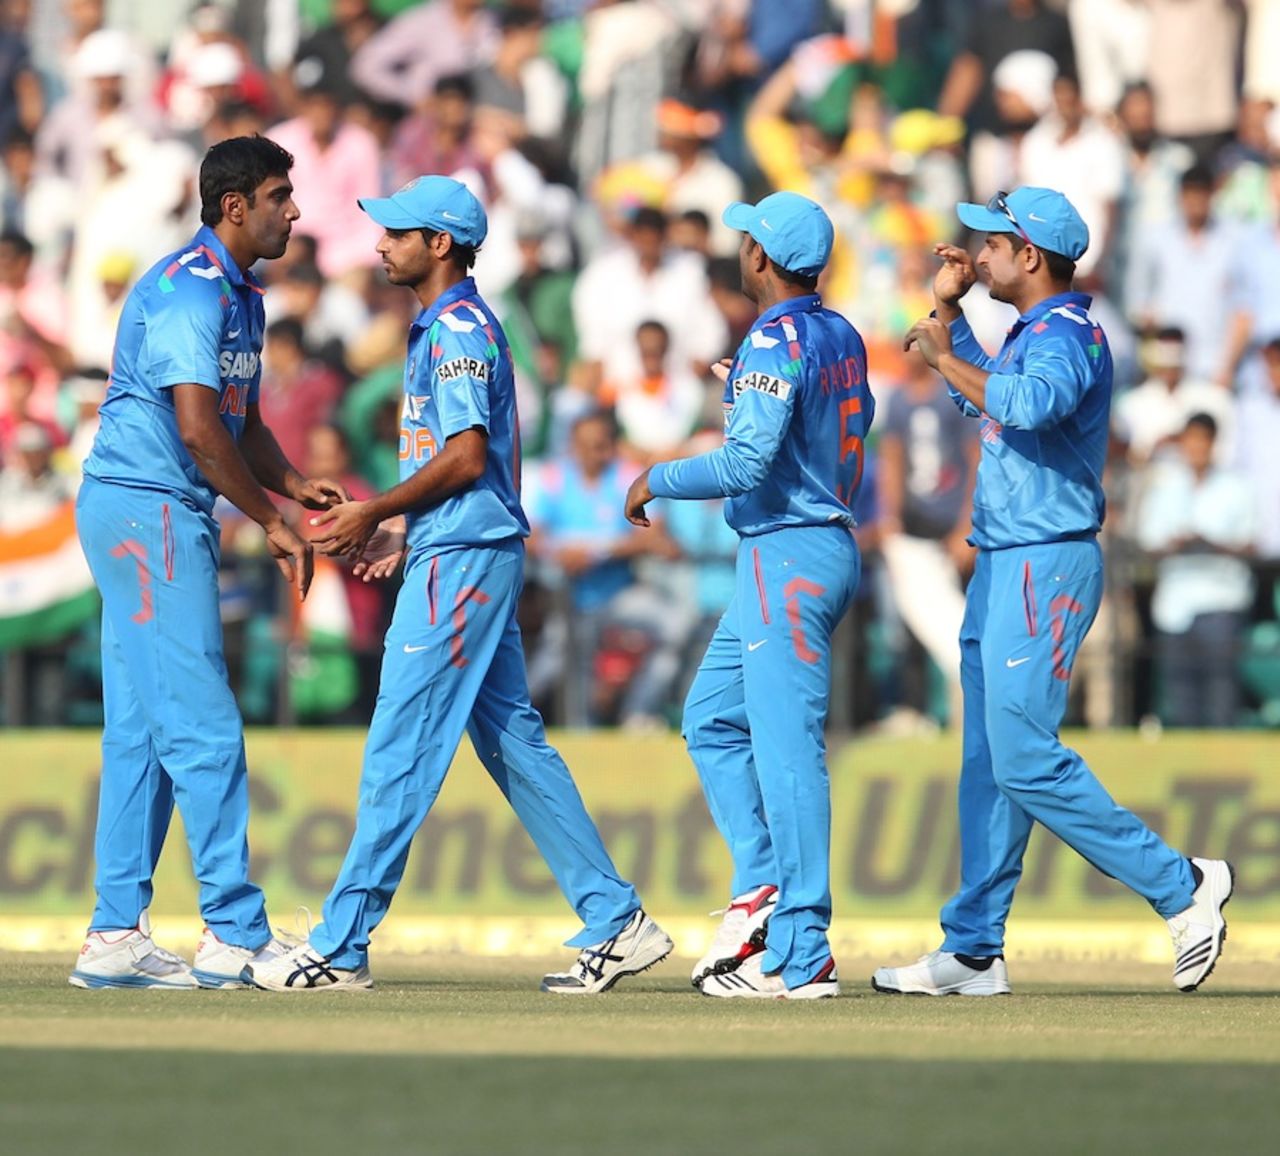 R Ashwin got rid of Glenn Maxwell early, India v Australia, 6th ODI, Nagpur, October 30, 2013